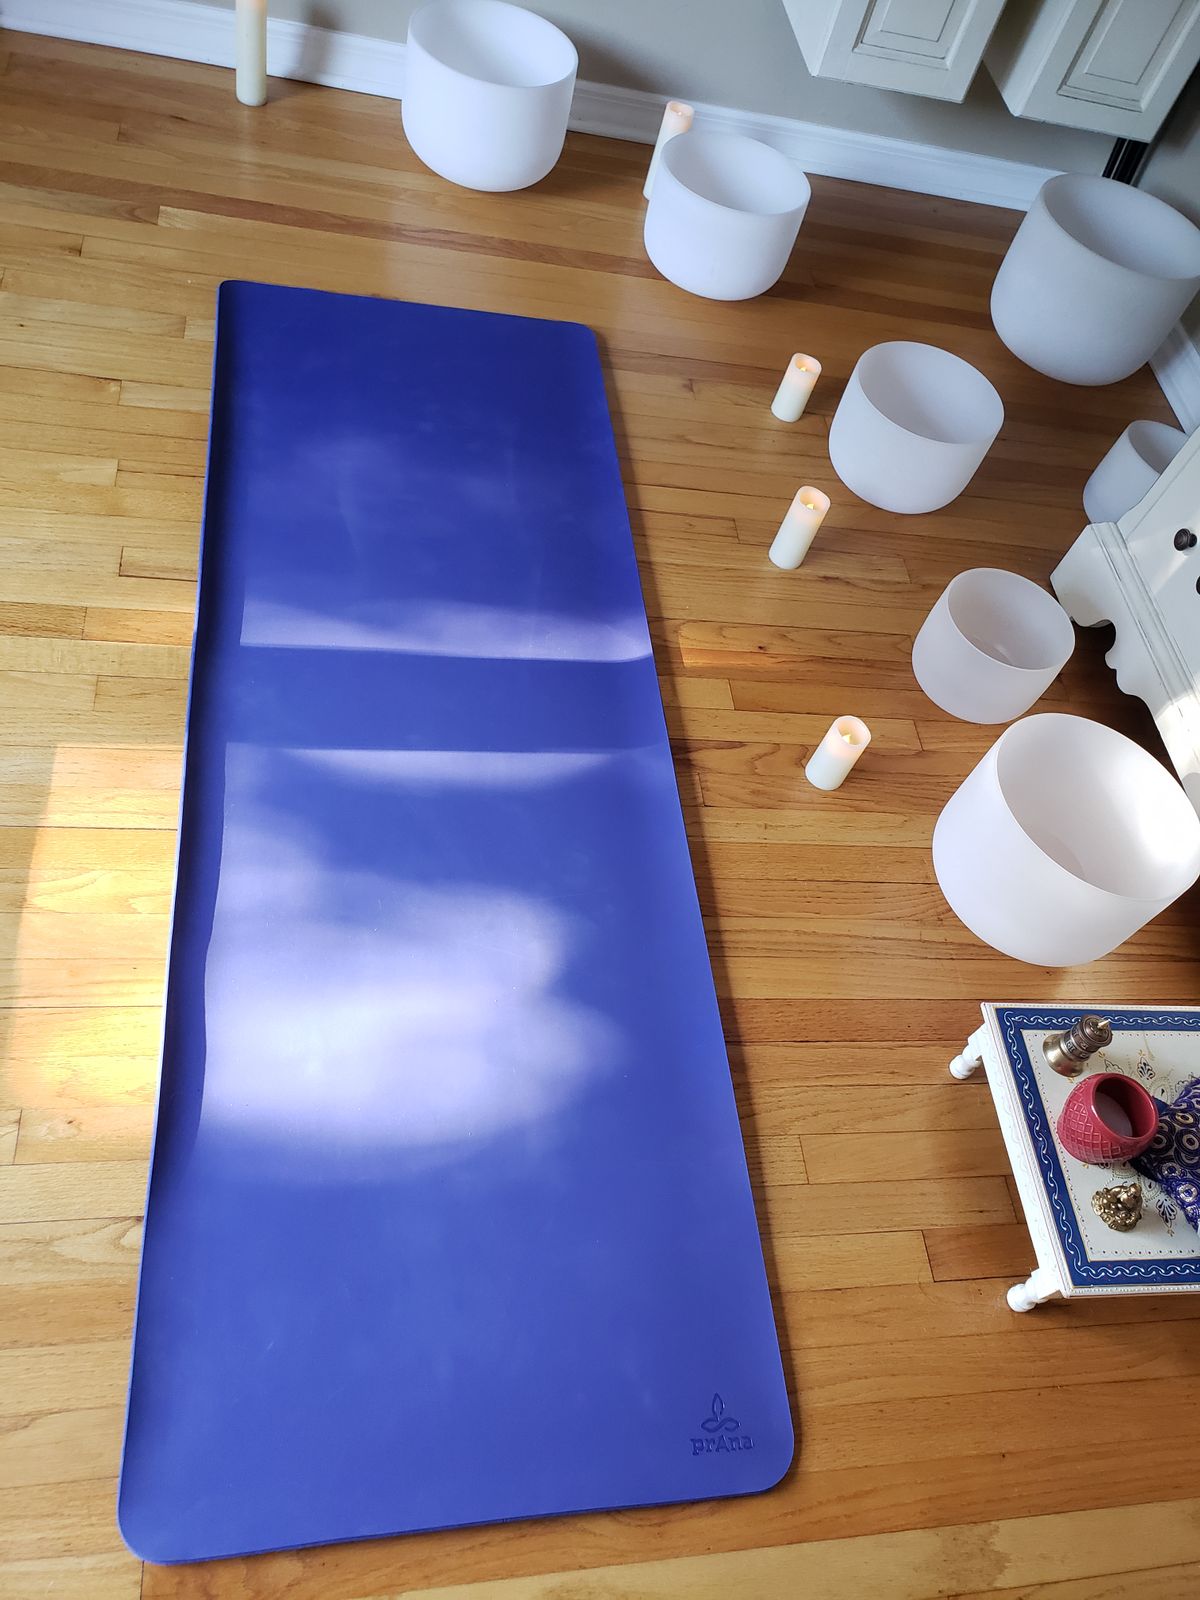 Prana ECO Yoga Mat